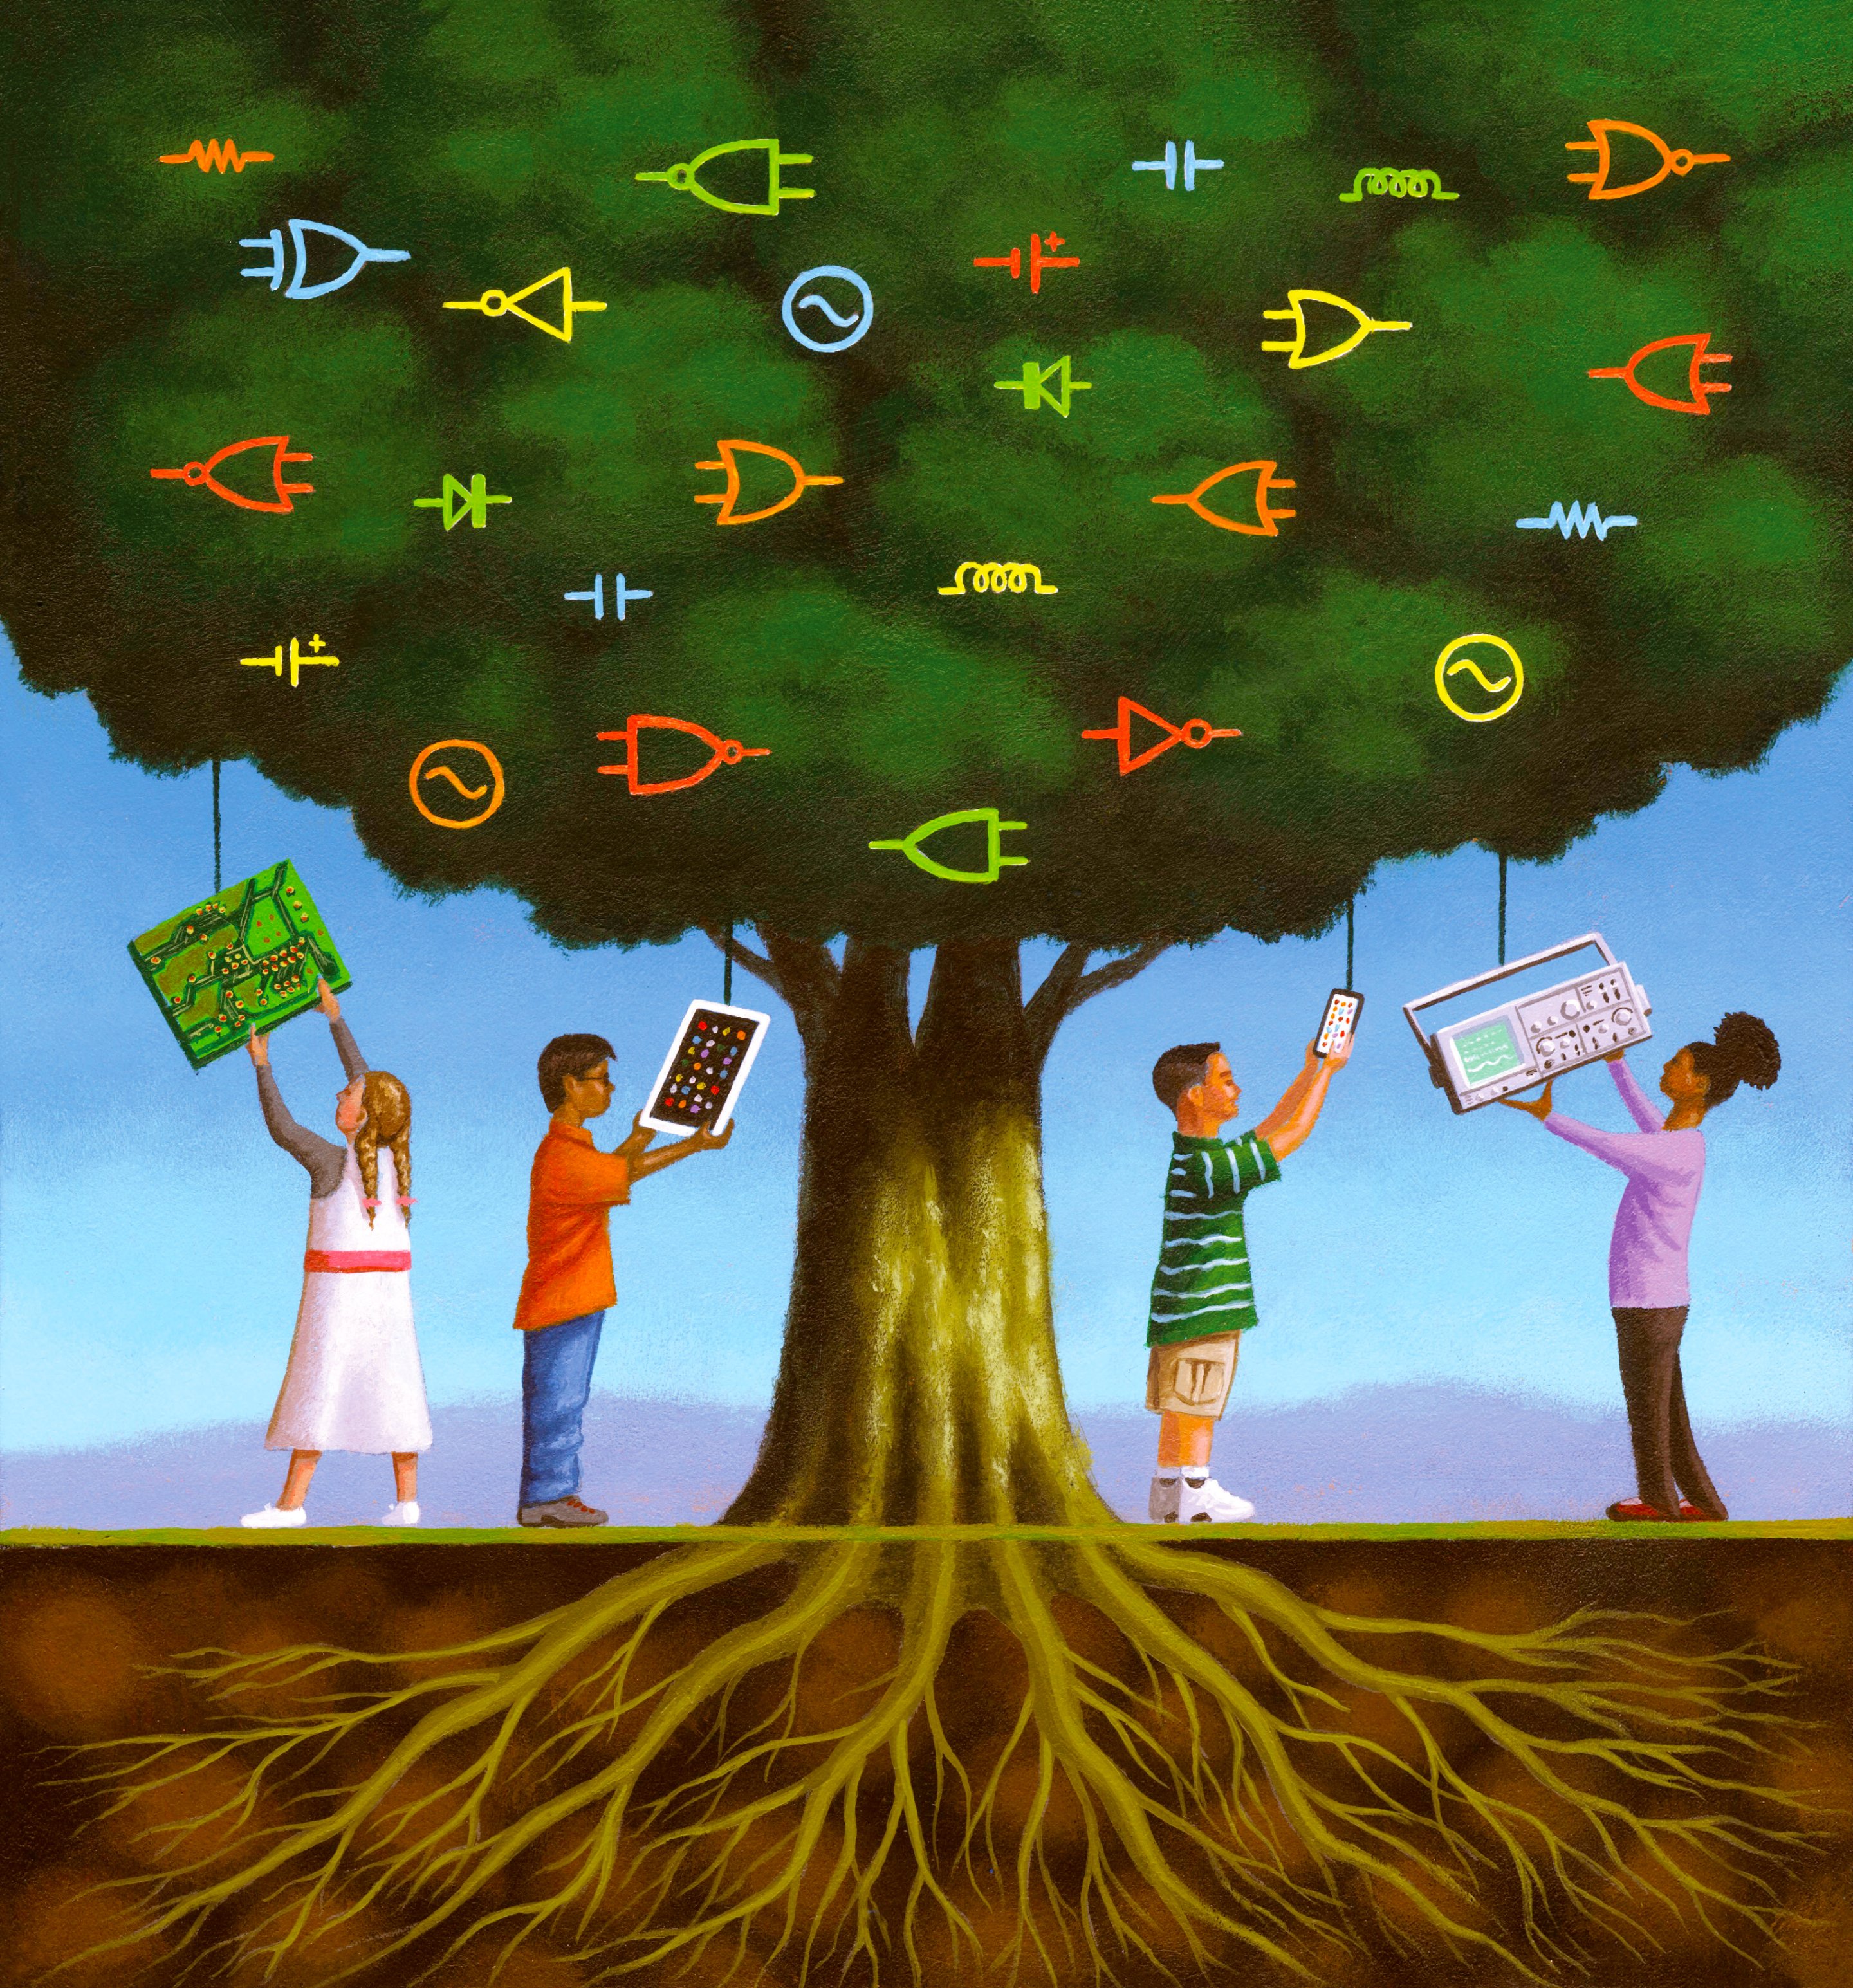 17 Fun Virtual Teacher Backgrounds for Online Teaching - We Are Teachers